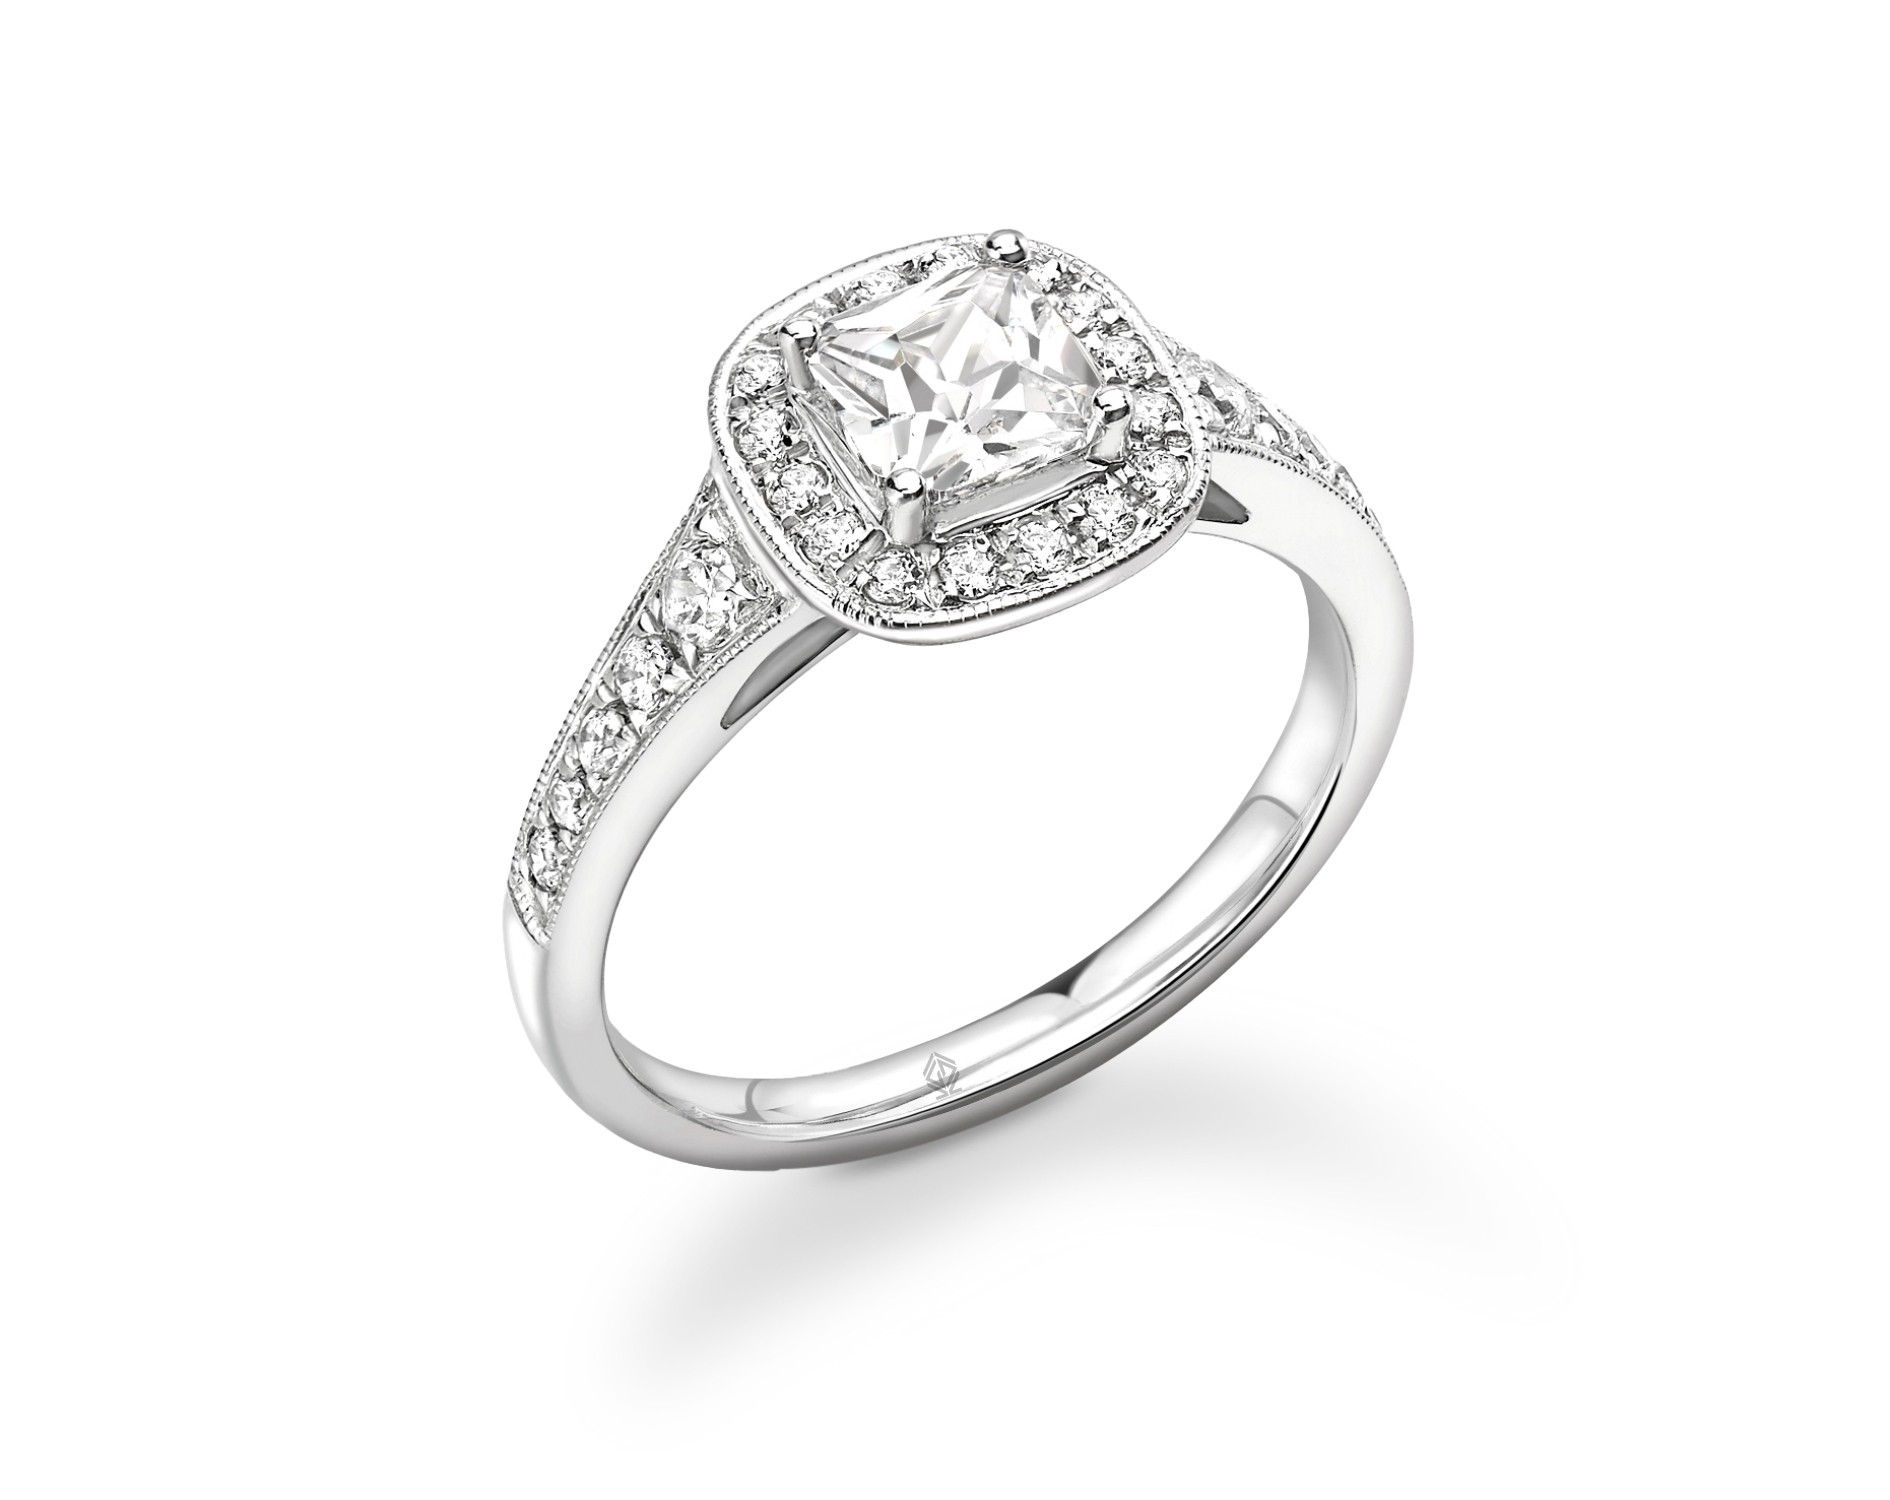 18K WHITE GOLD VINTAGE MILGRAIN HALO CUSHION CUT DIAMOND RING WITH SIDE DIAMONDS CHANNEL SET